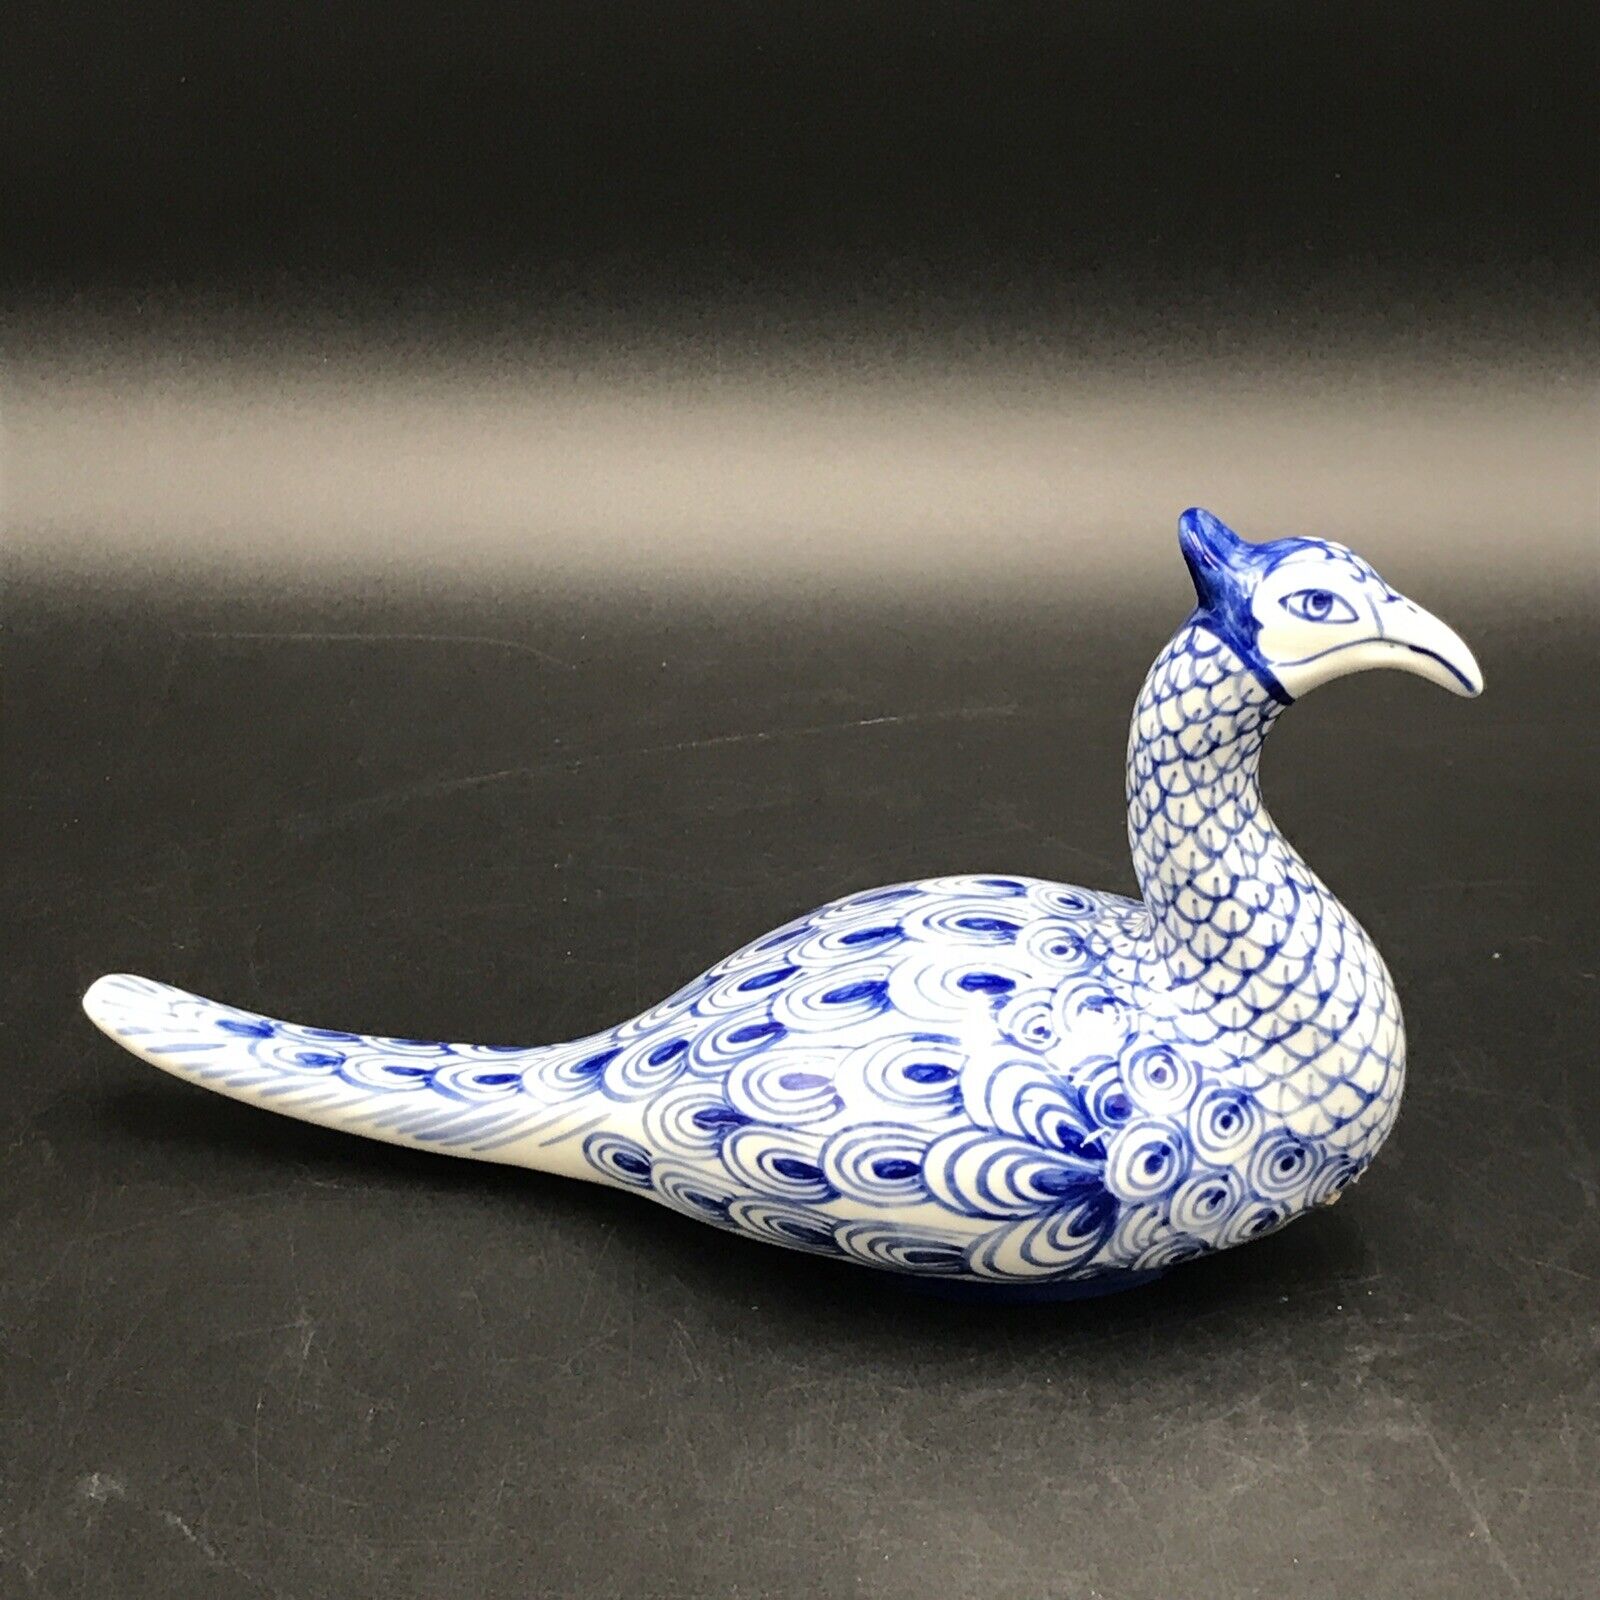 Ceramic Porcelain Pheasant / Peacock Figurines Blue And White 9”